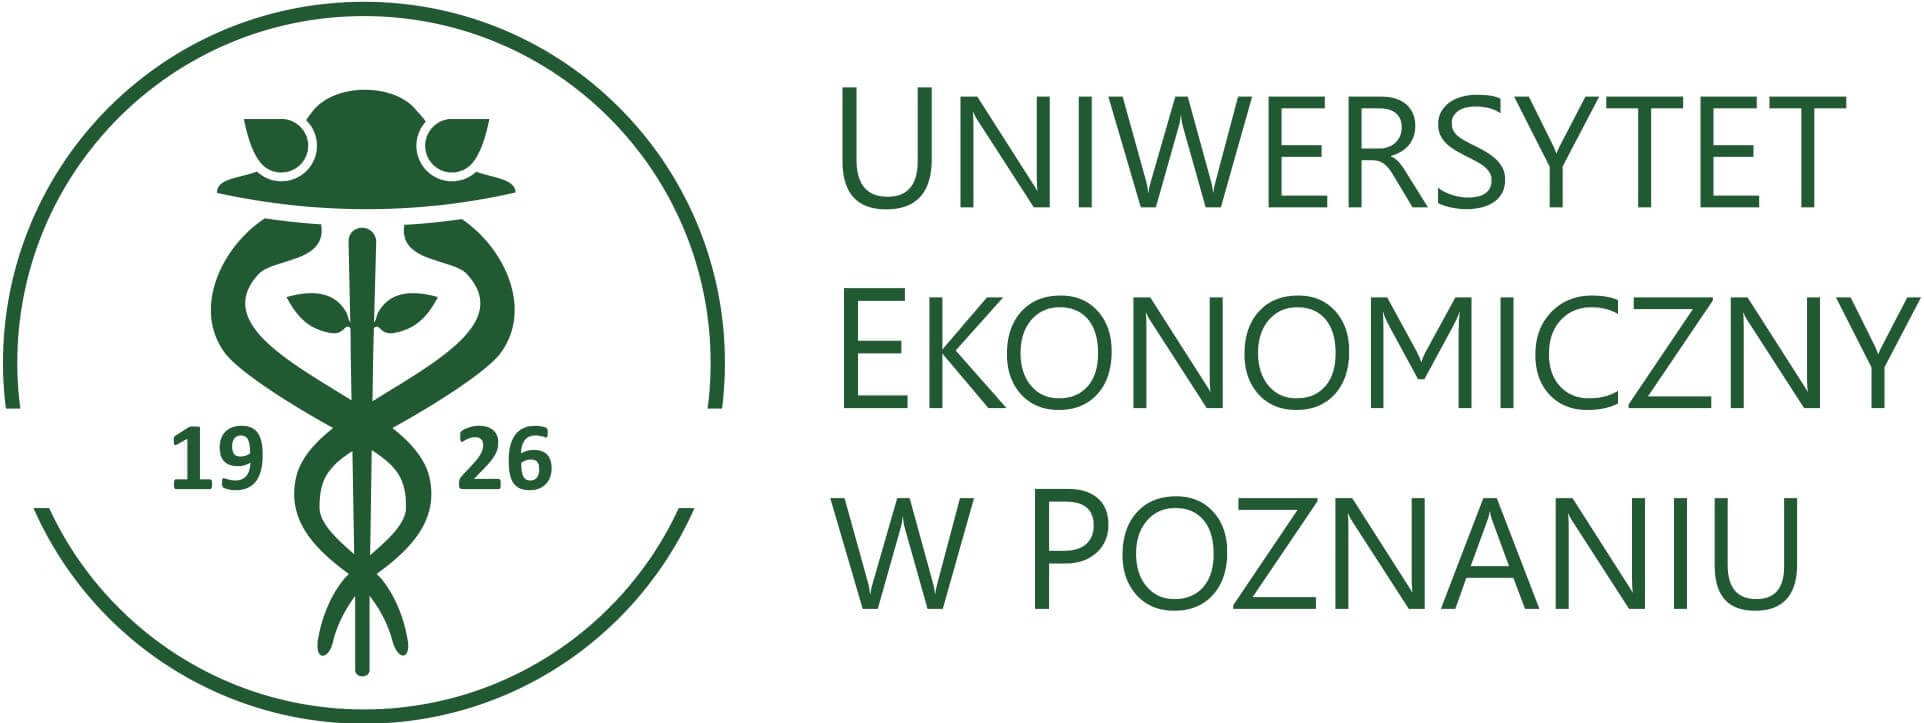 Uniwersytet Ekonomiczny Poznań